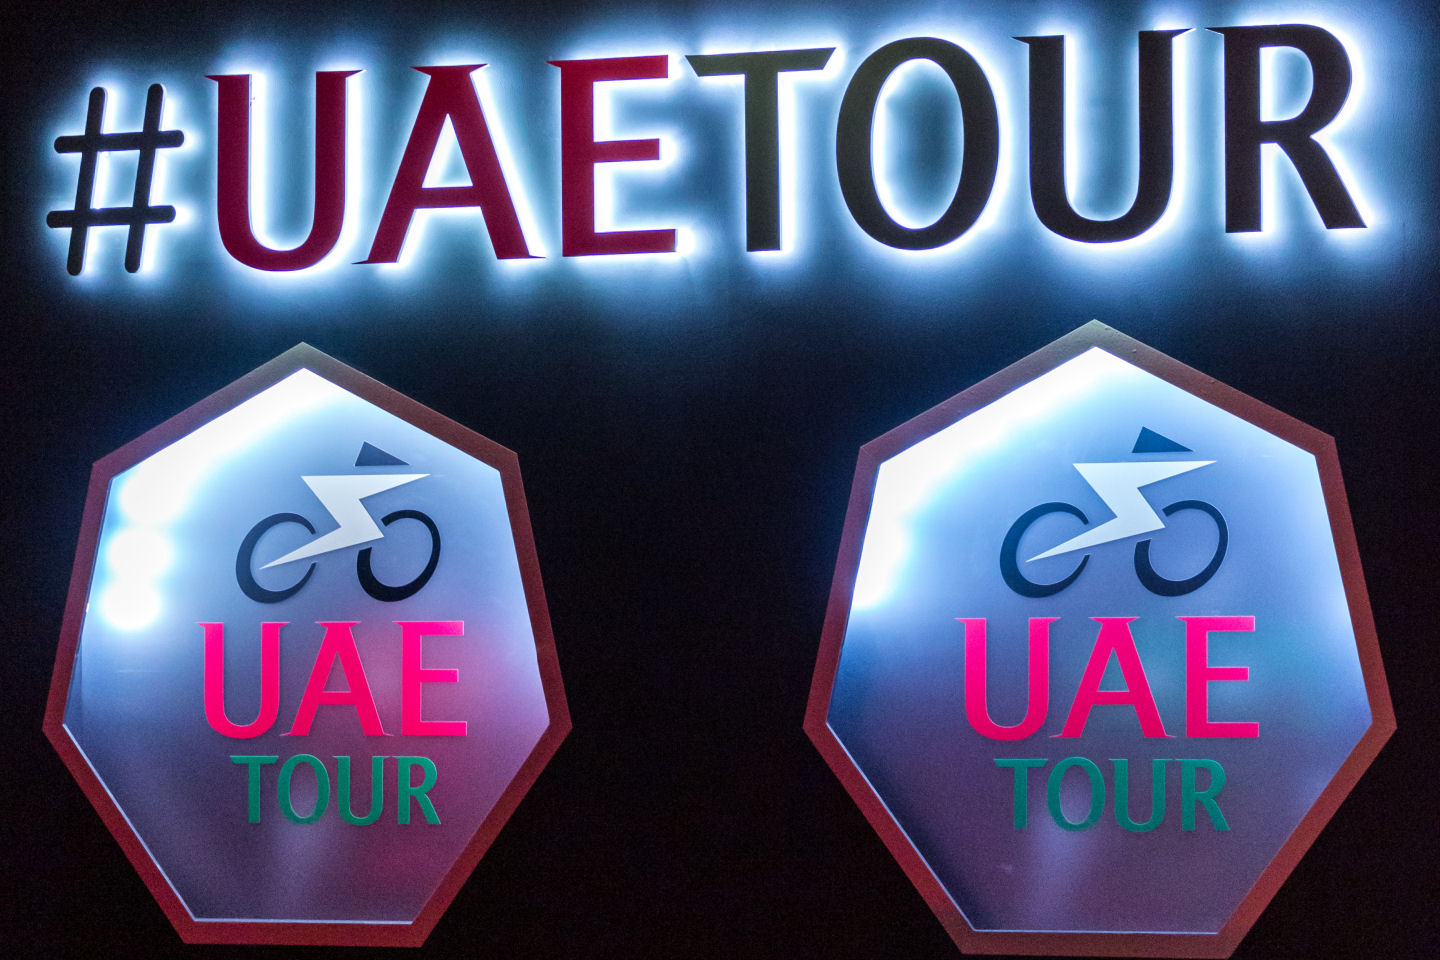 Trasa UAE Tour 2019